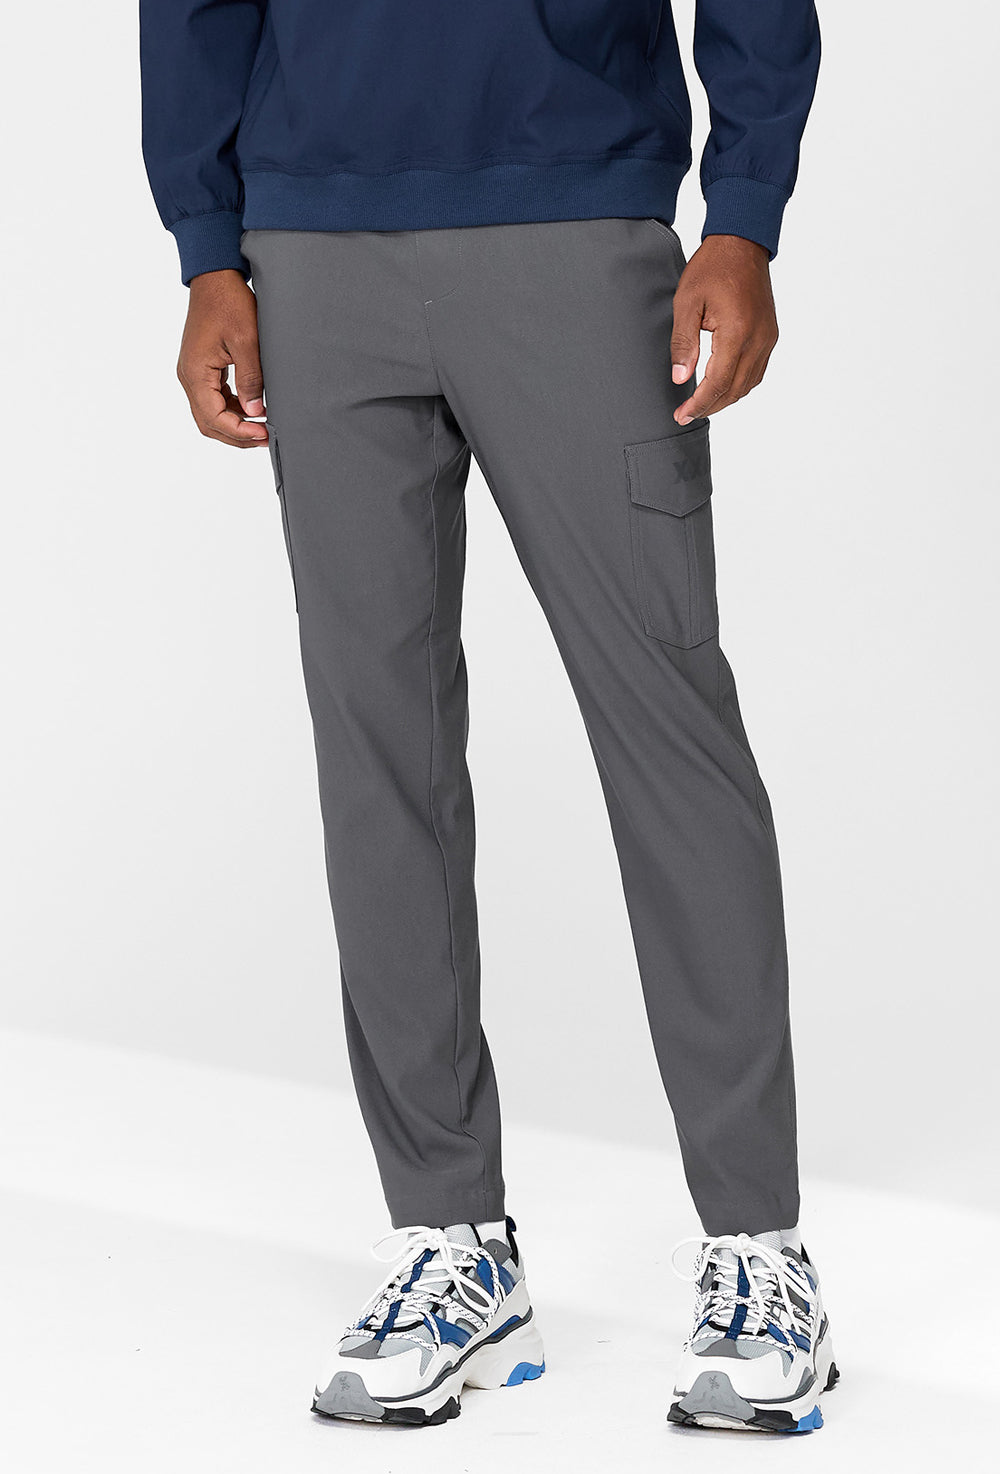 Stretch Out Pocket Pants - Gray